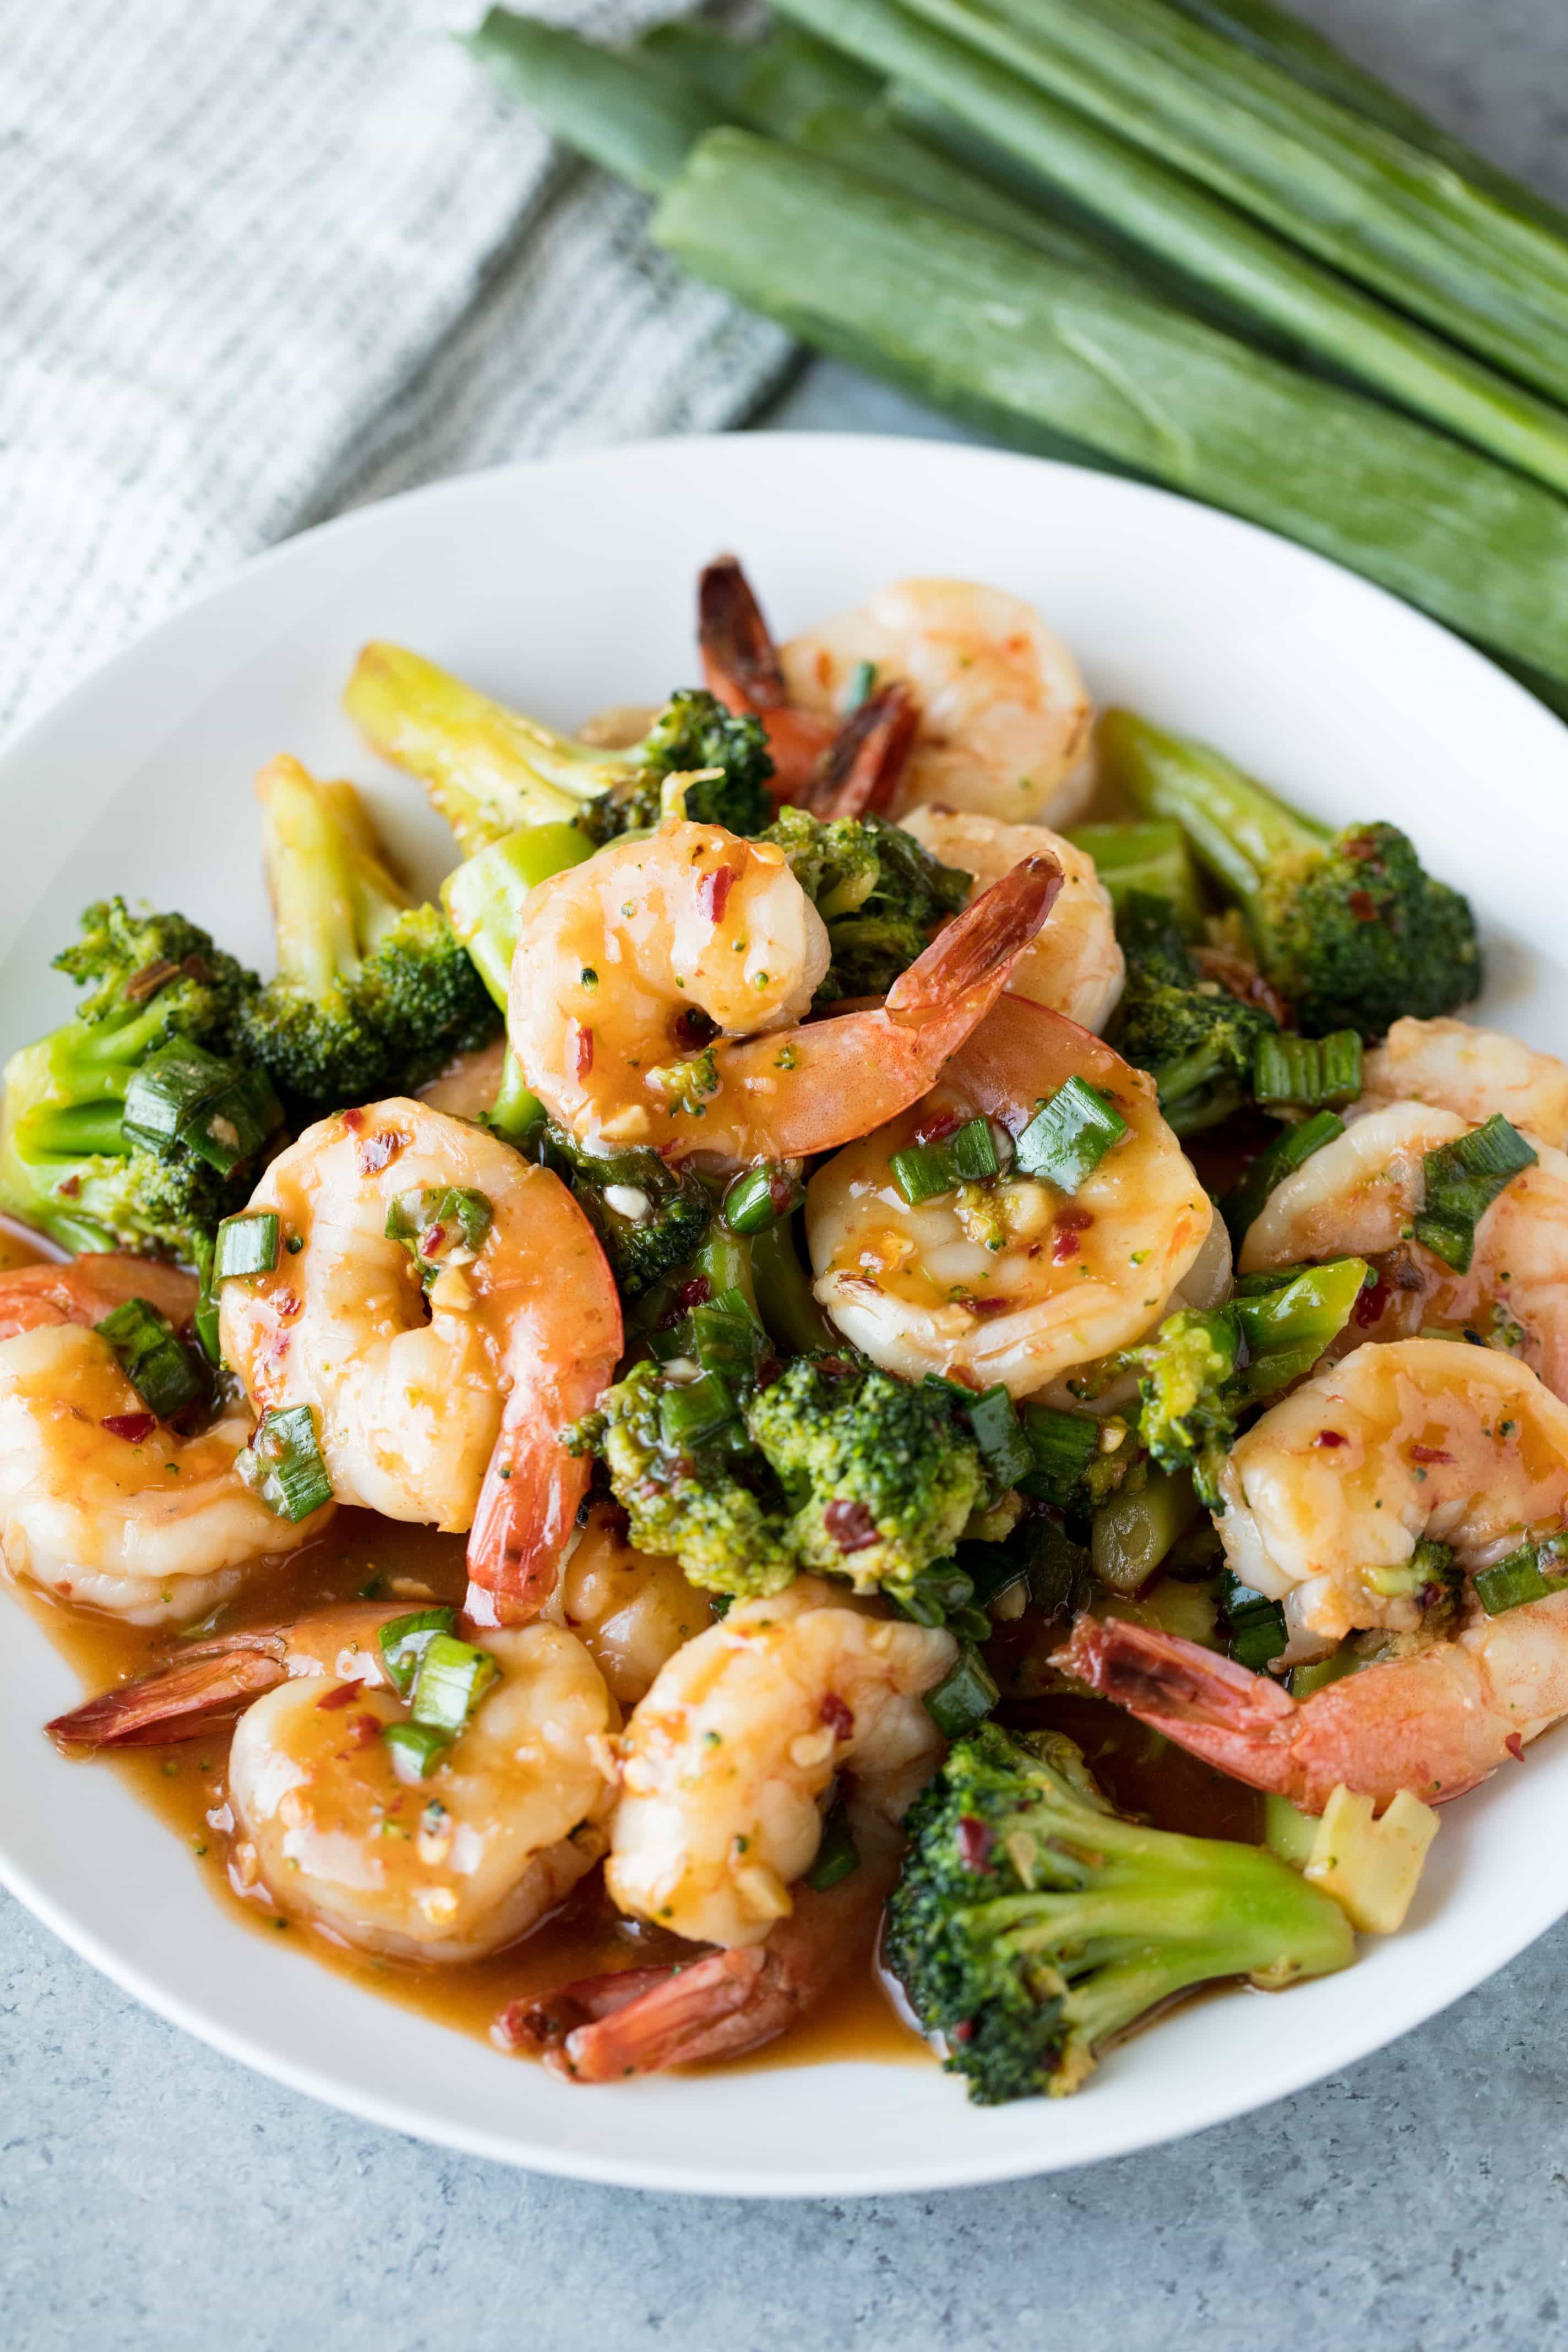 Shrimp and Broccoli in white bowl